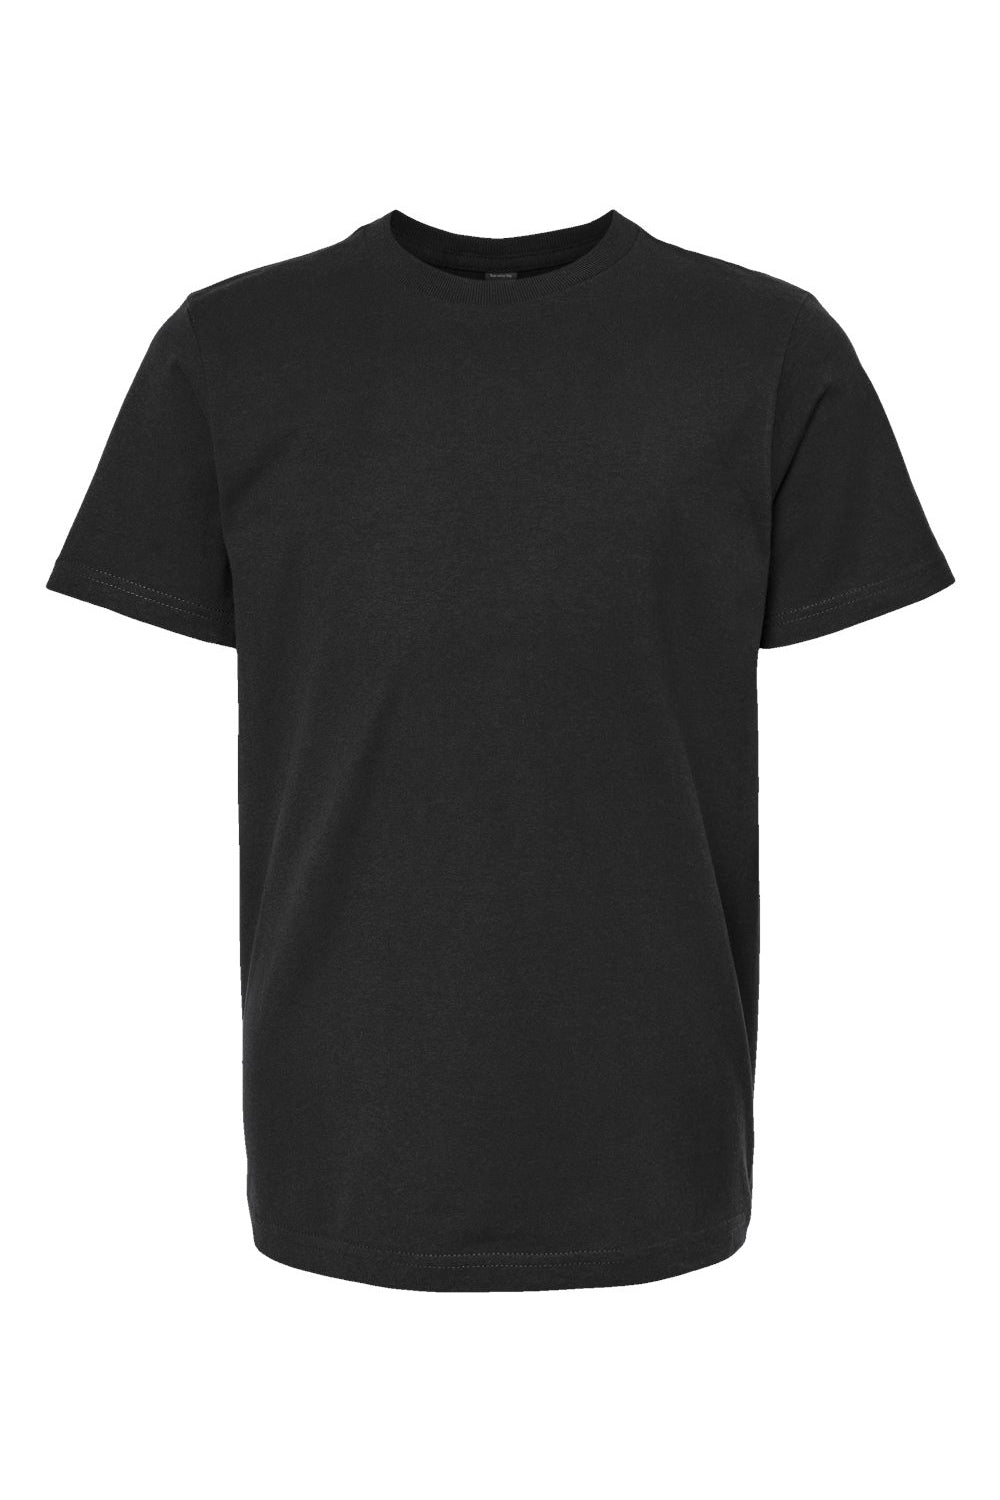 Tultex 295 Youth Jersey Short Sleeve Crewneck T-Shirt Black Flat Front